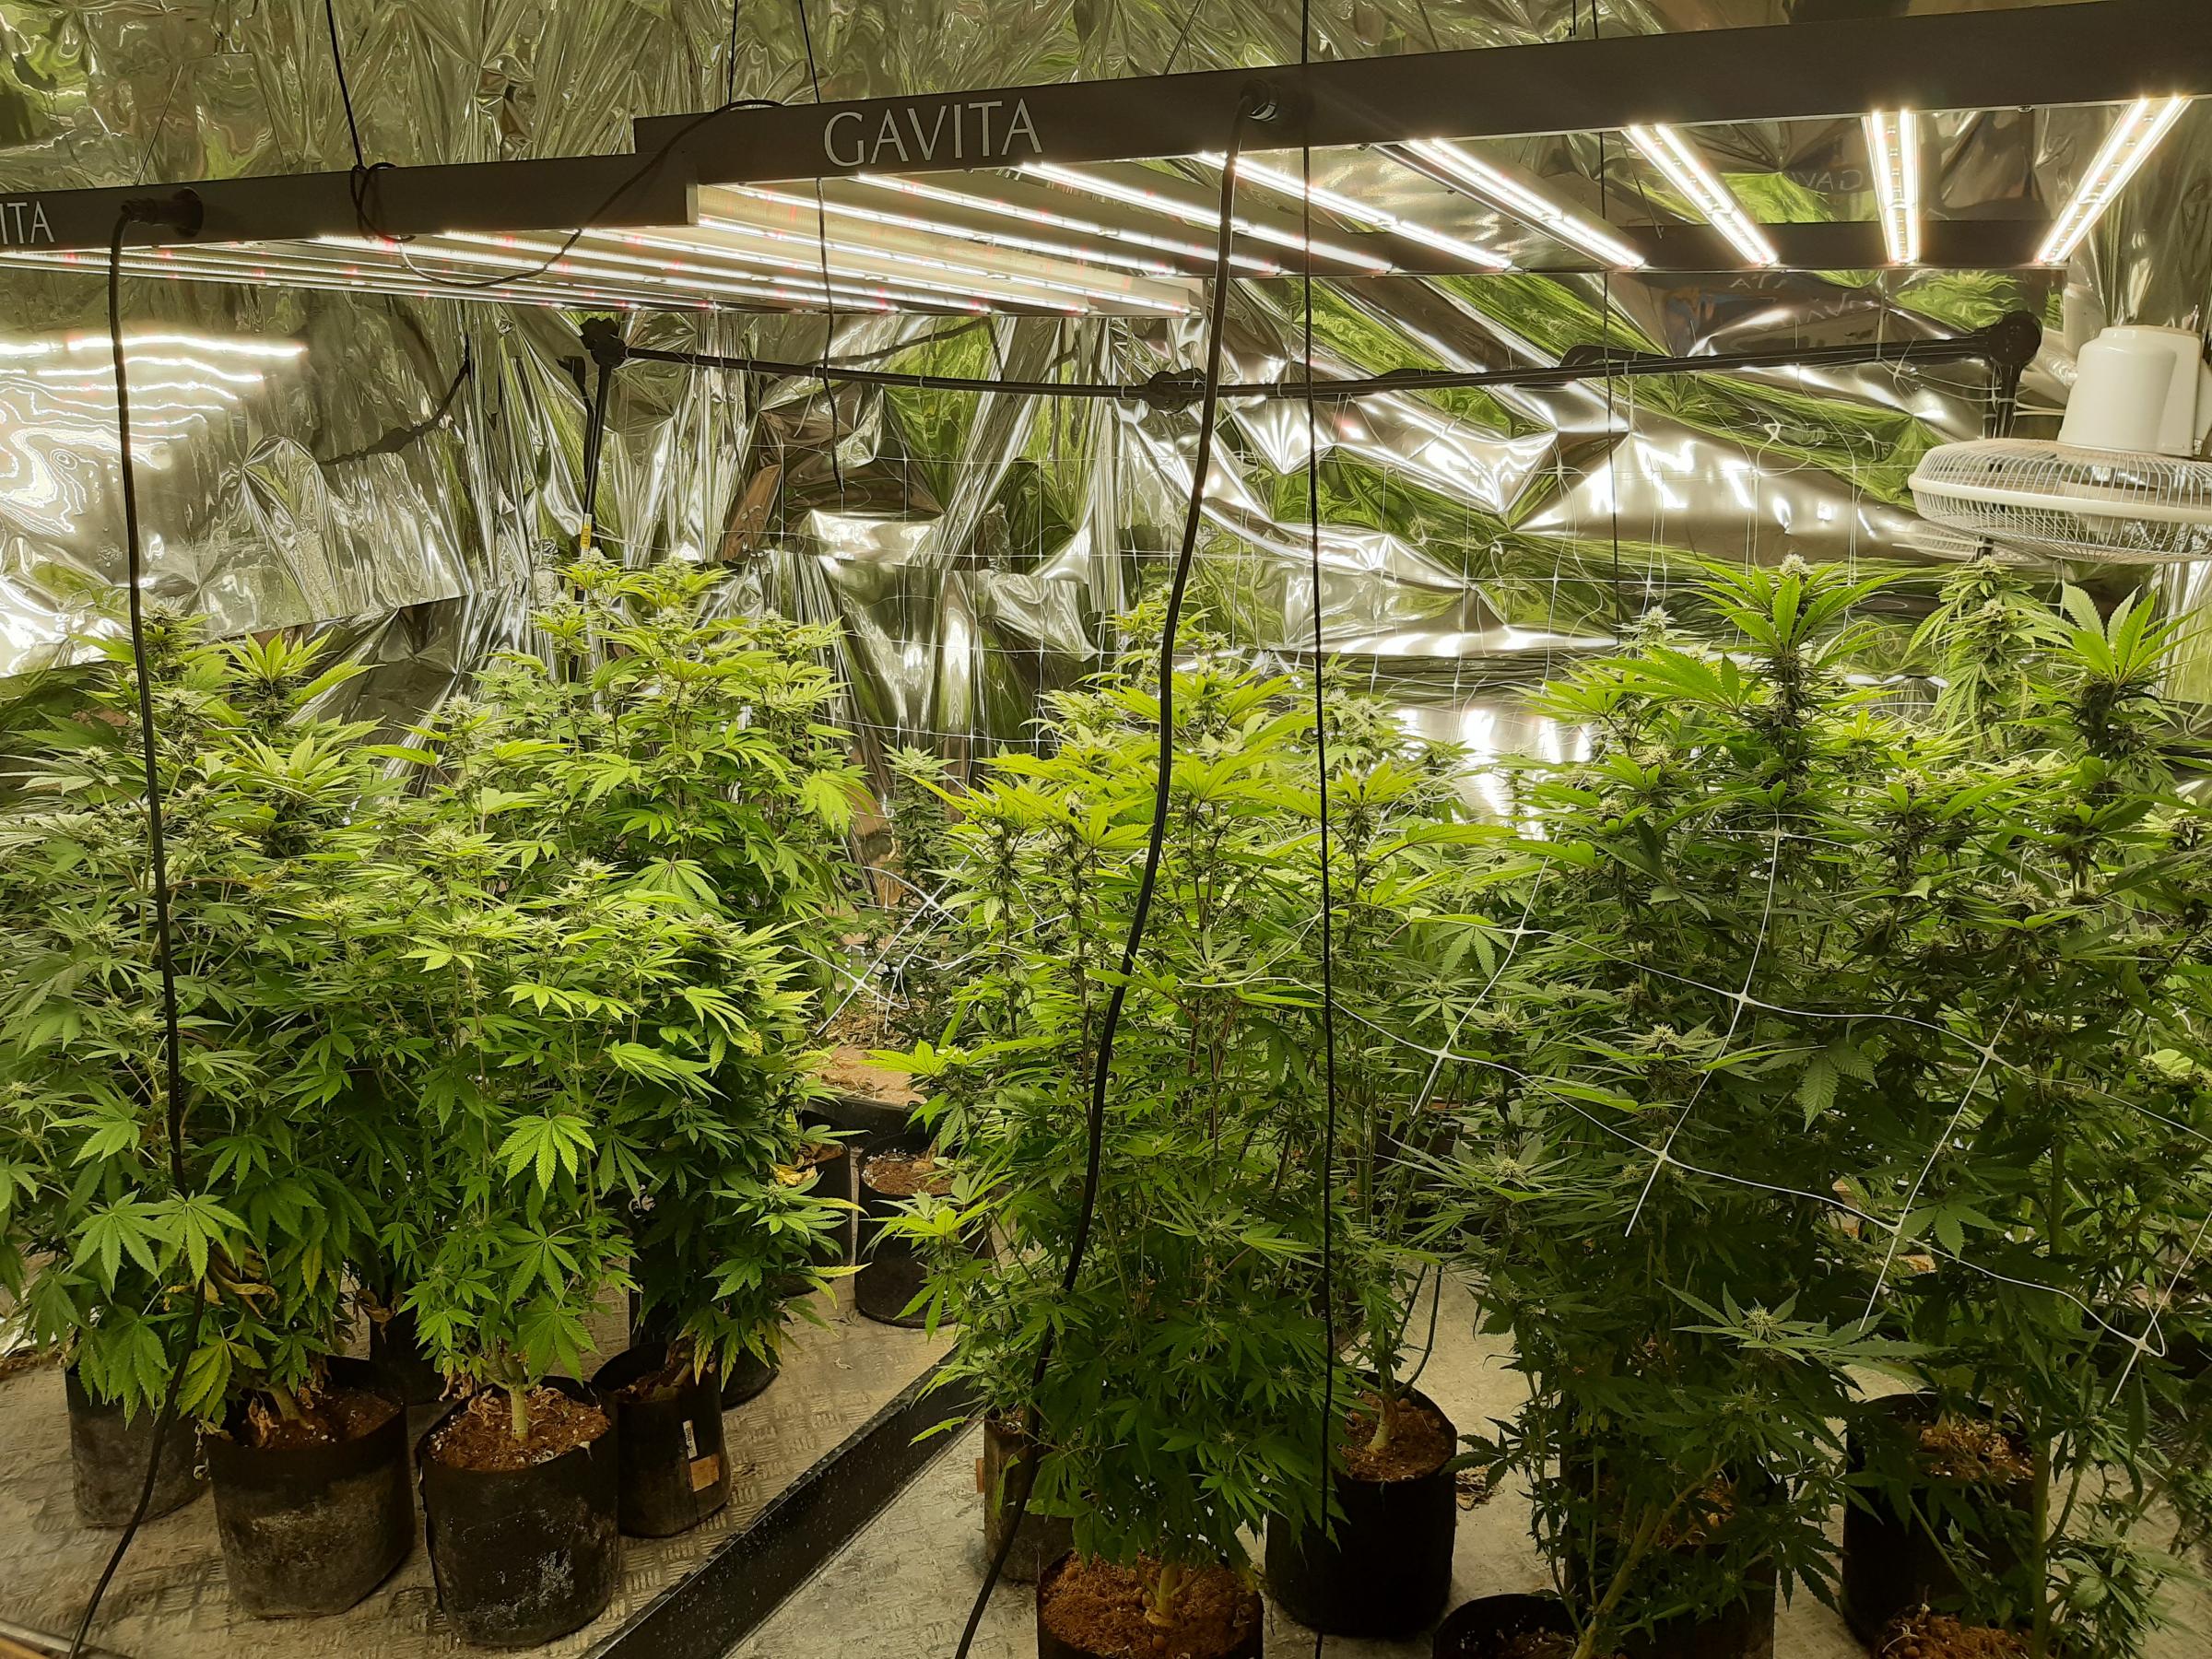 A cannabis grow was uncovered following a raid